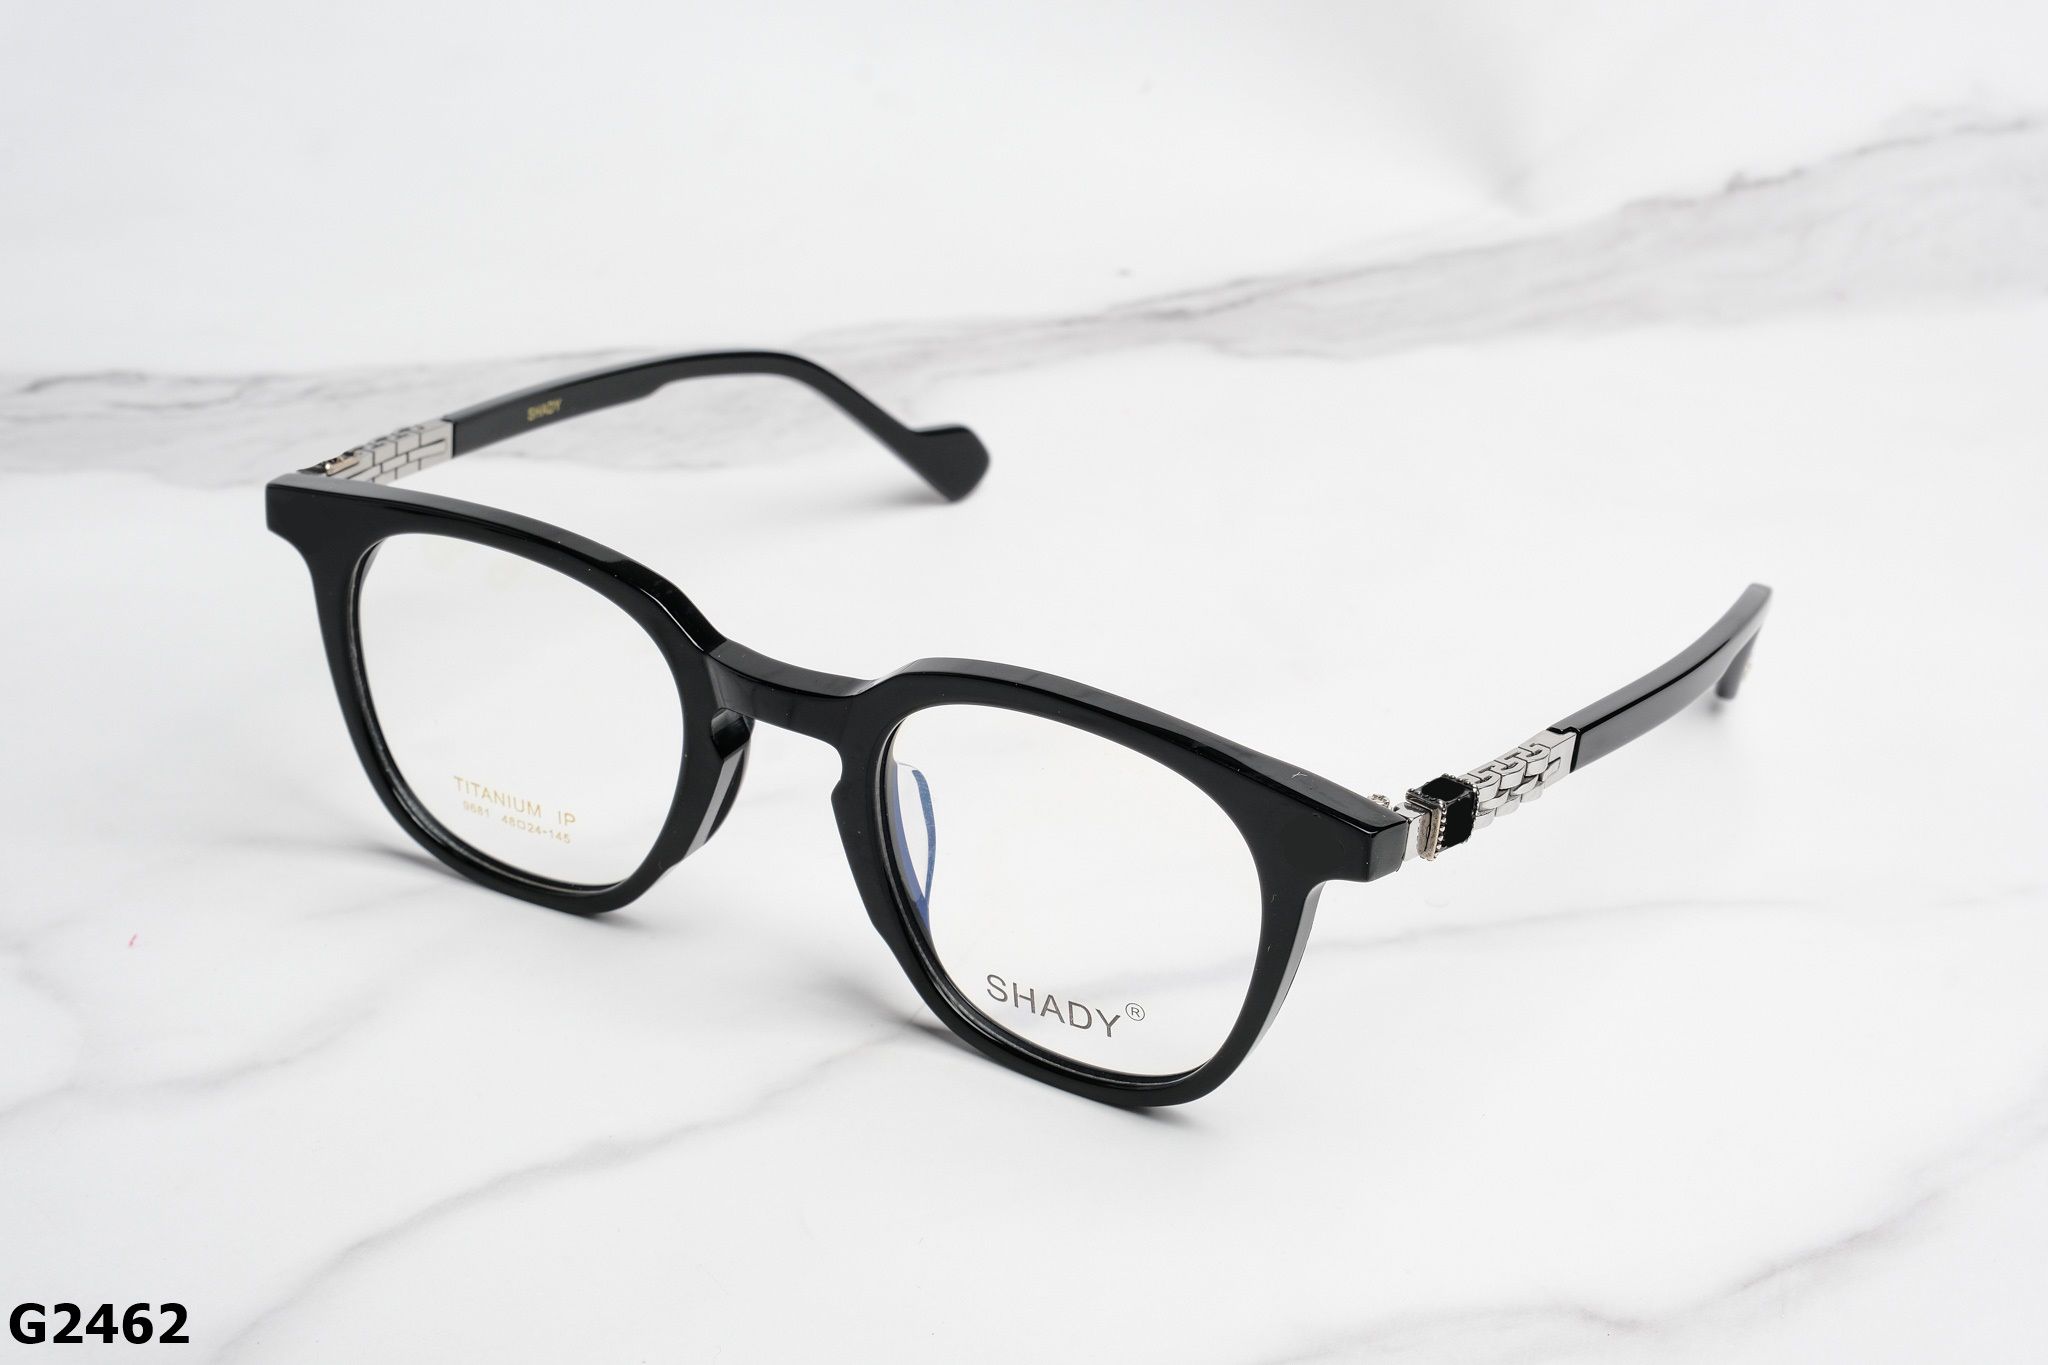  SHADY Eyewear - Glasses - G2462 